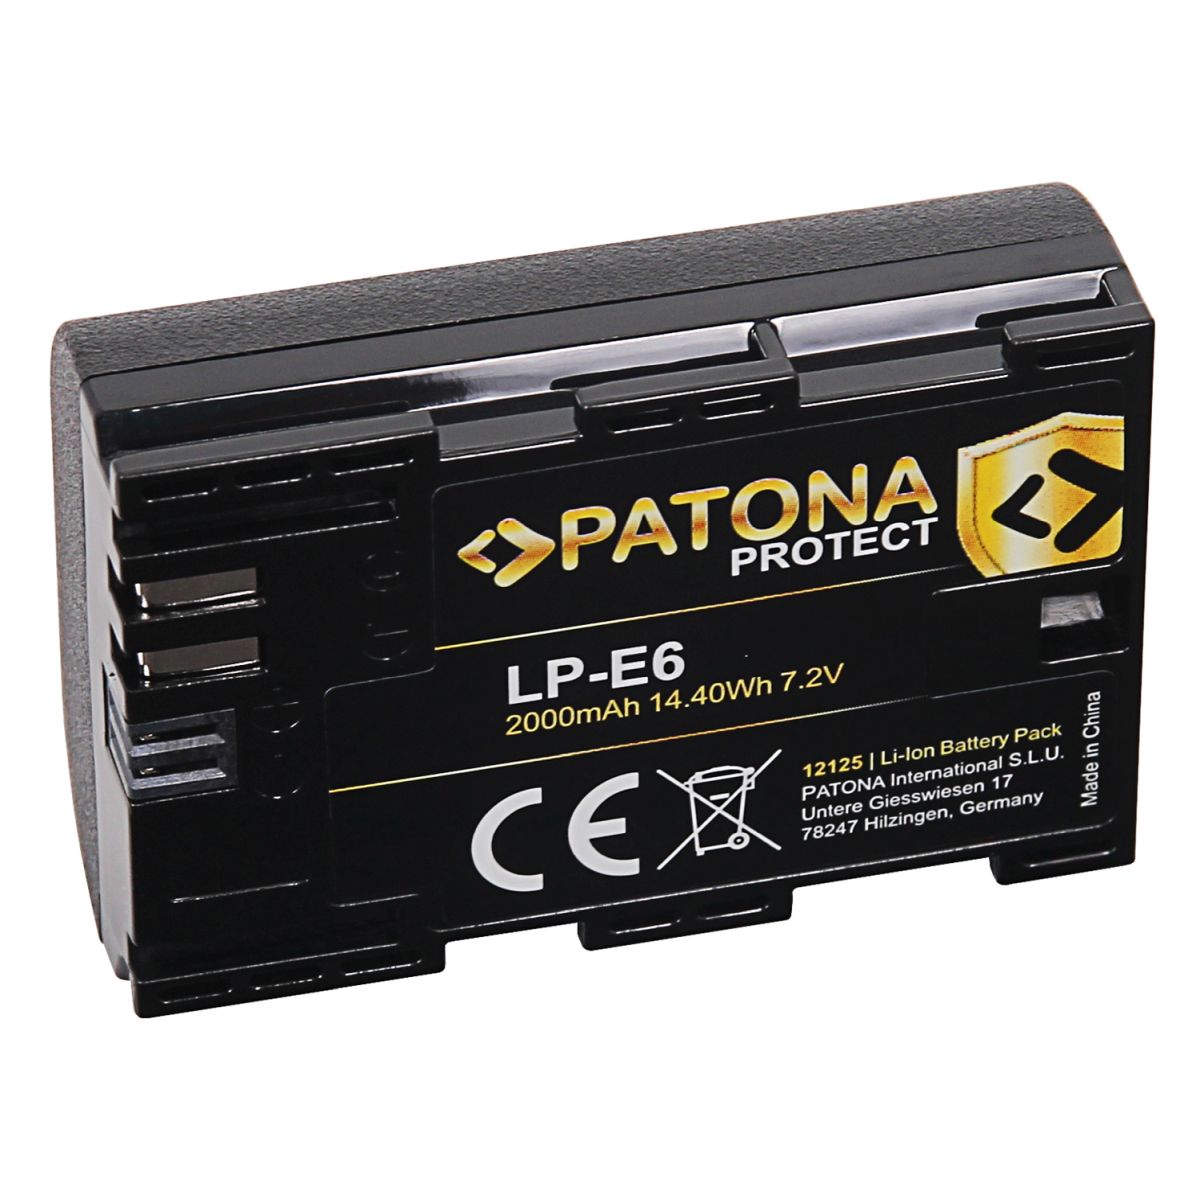 Patona Protect Akku Canon LP-E6